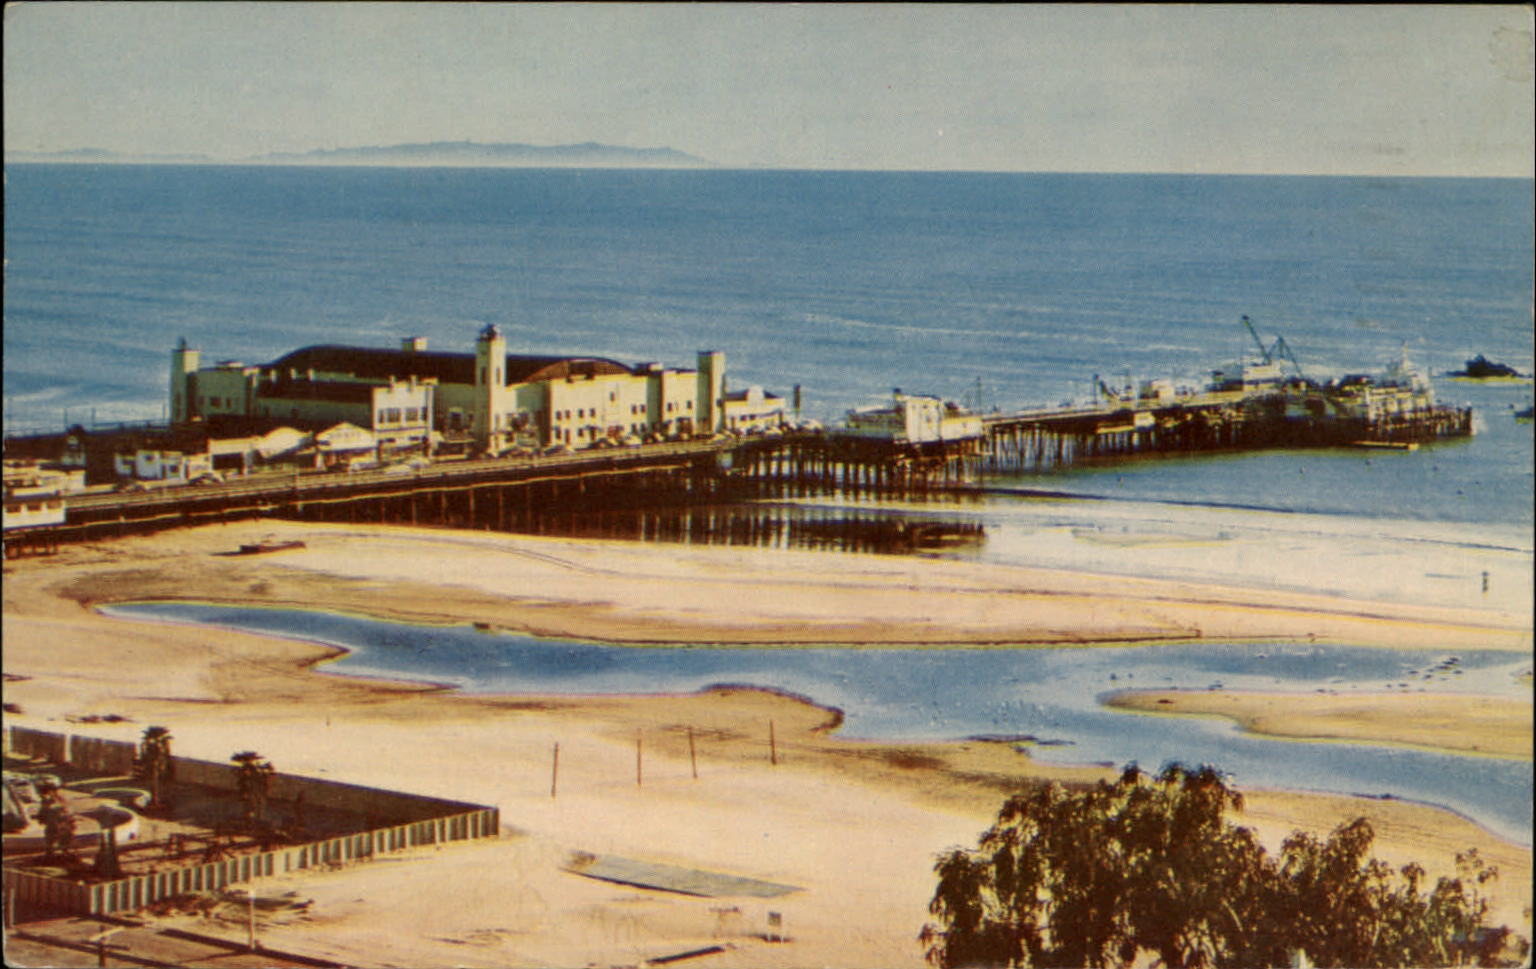 Santa Monica California Municipal Pier ~ Newcomb Pier ~ 1957 postcard